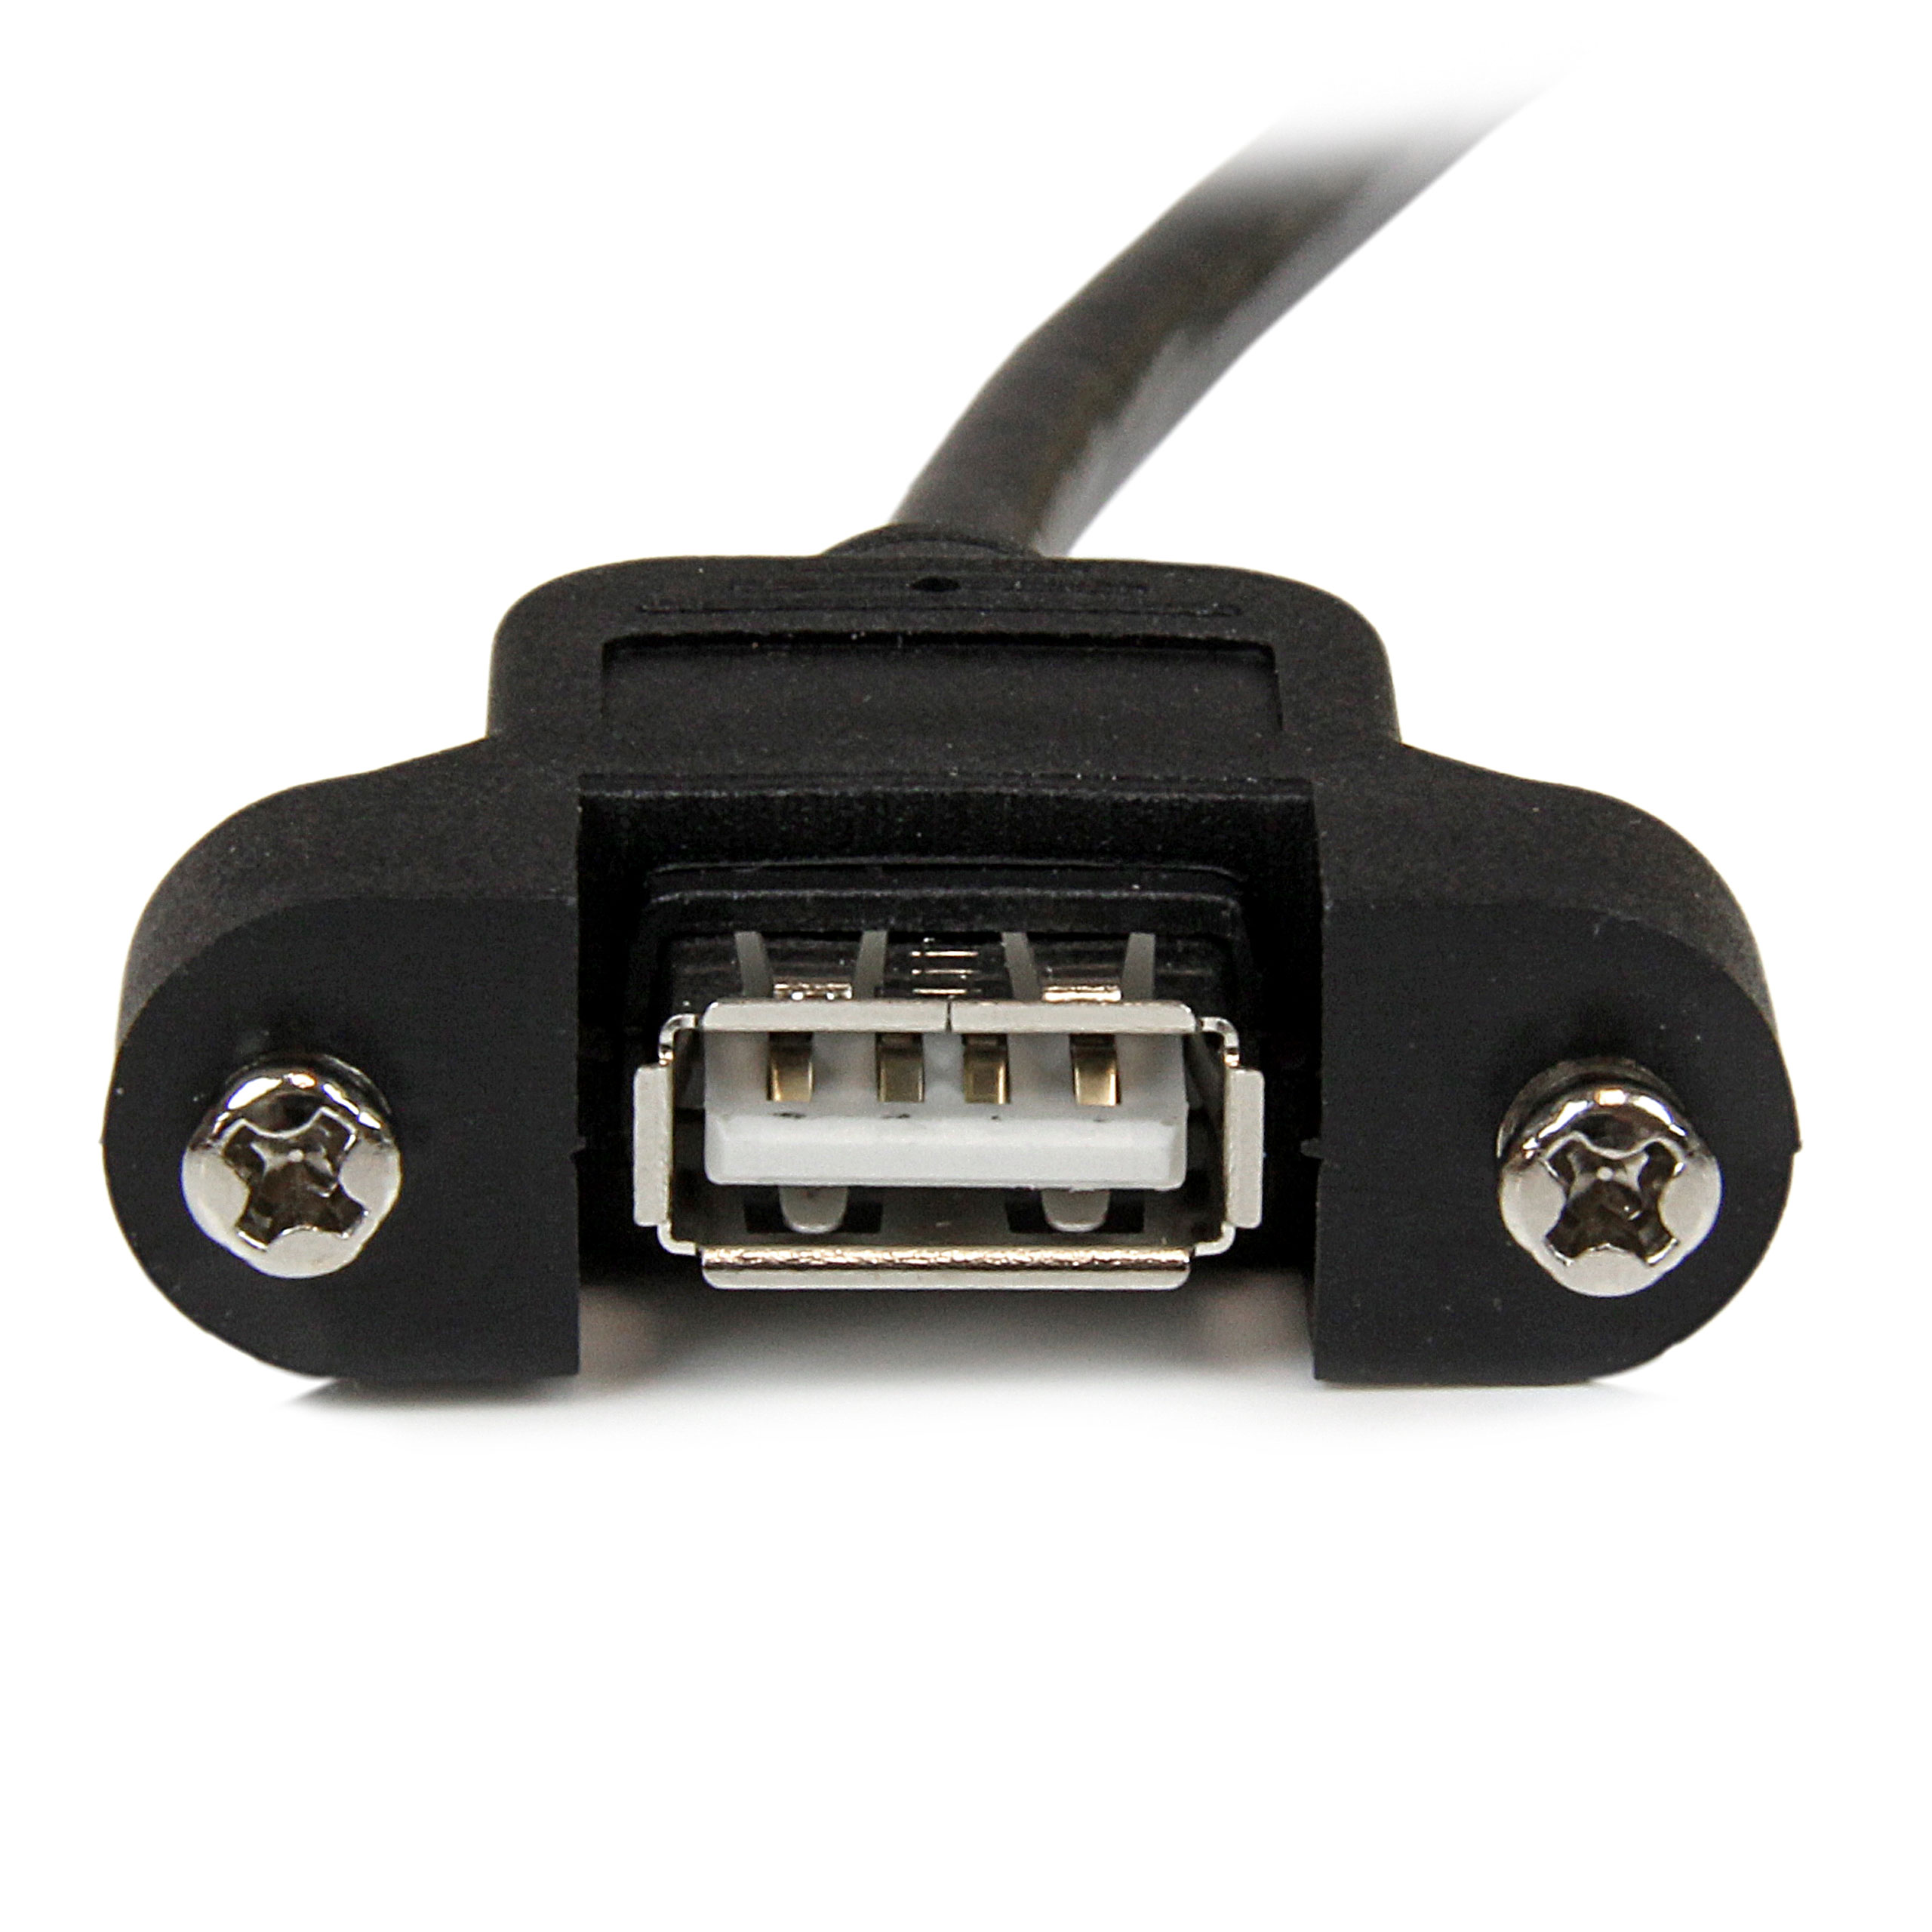 EXTENSOR CONECTOR USB-B/H MONTAJE PANEL 30CM